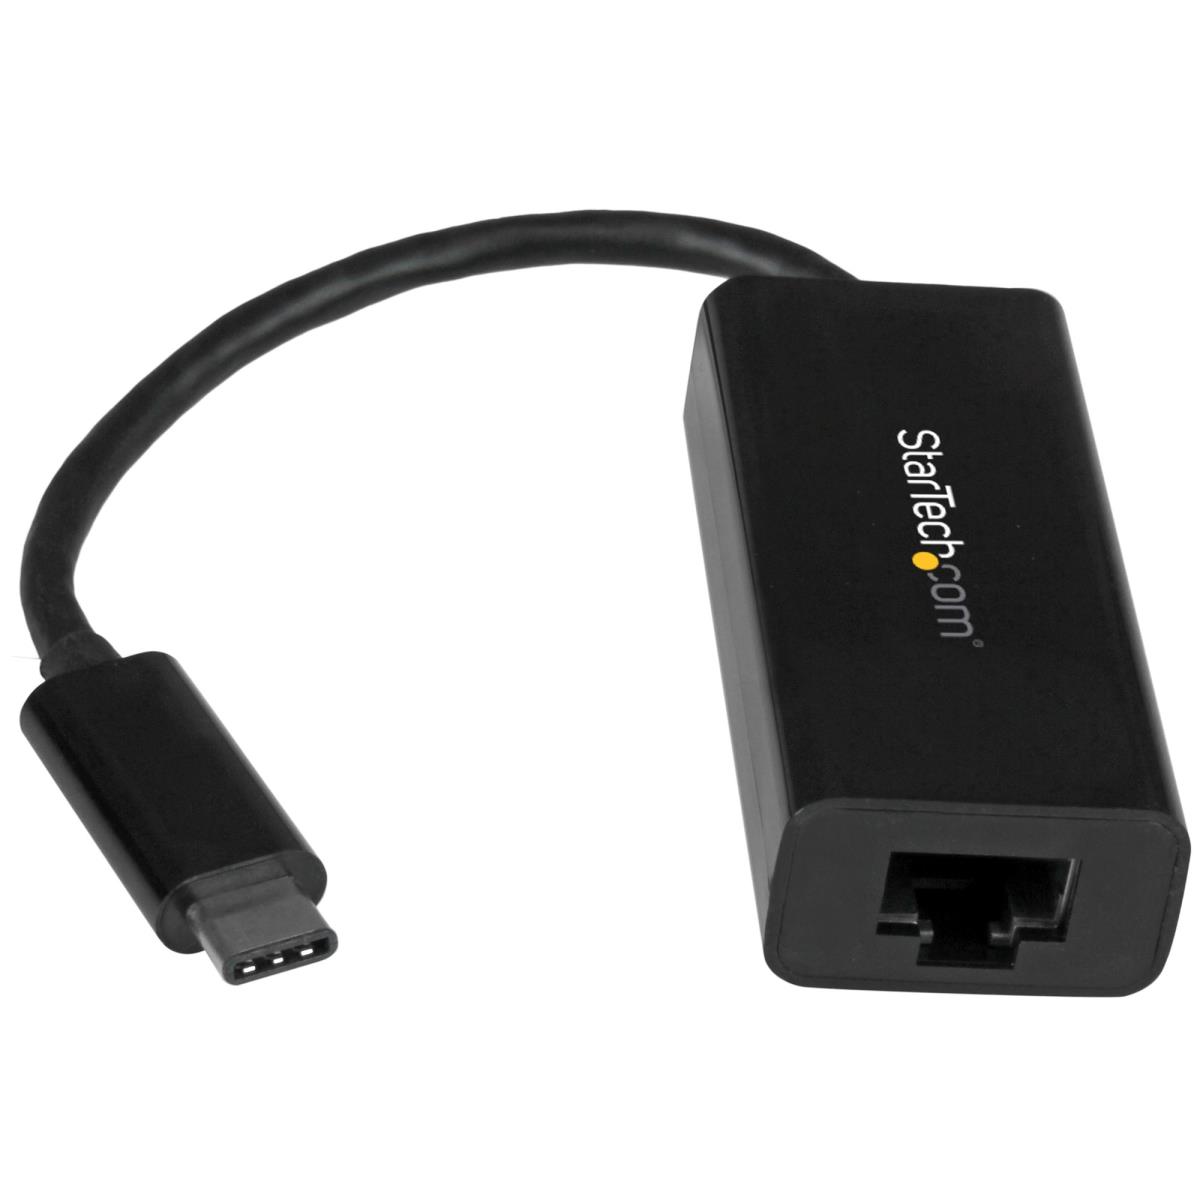 Adaptateur USB-A/USB-C vers Ethernet, 4 en 1, Hub USB 3 ports, RJ45 100